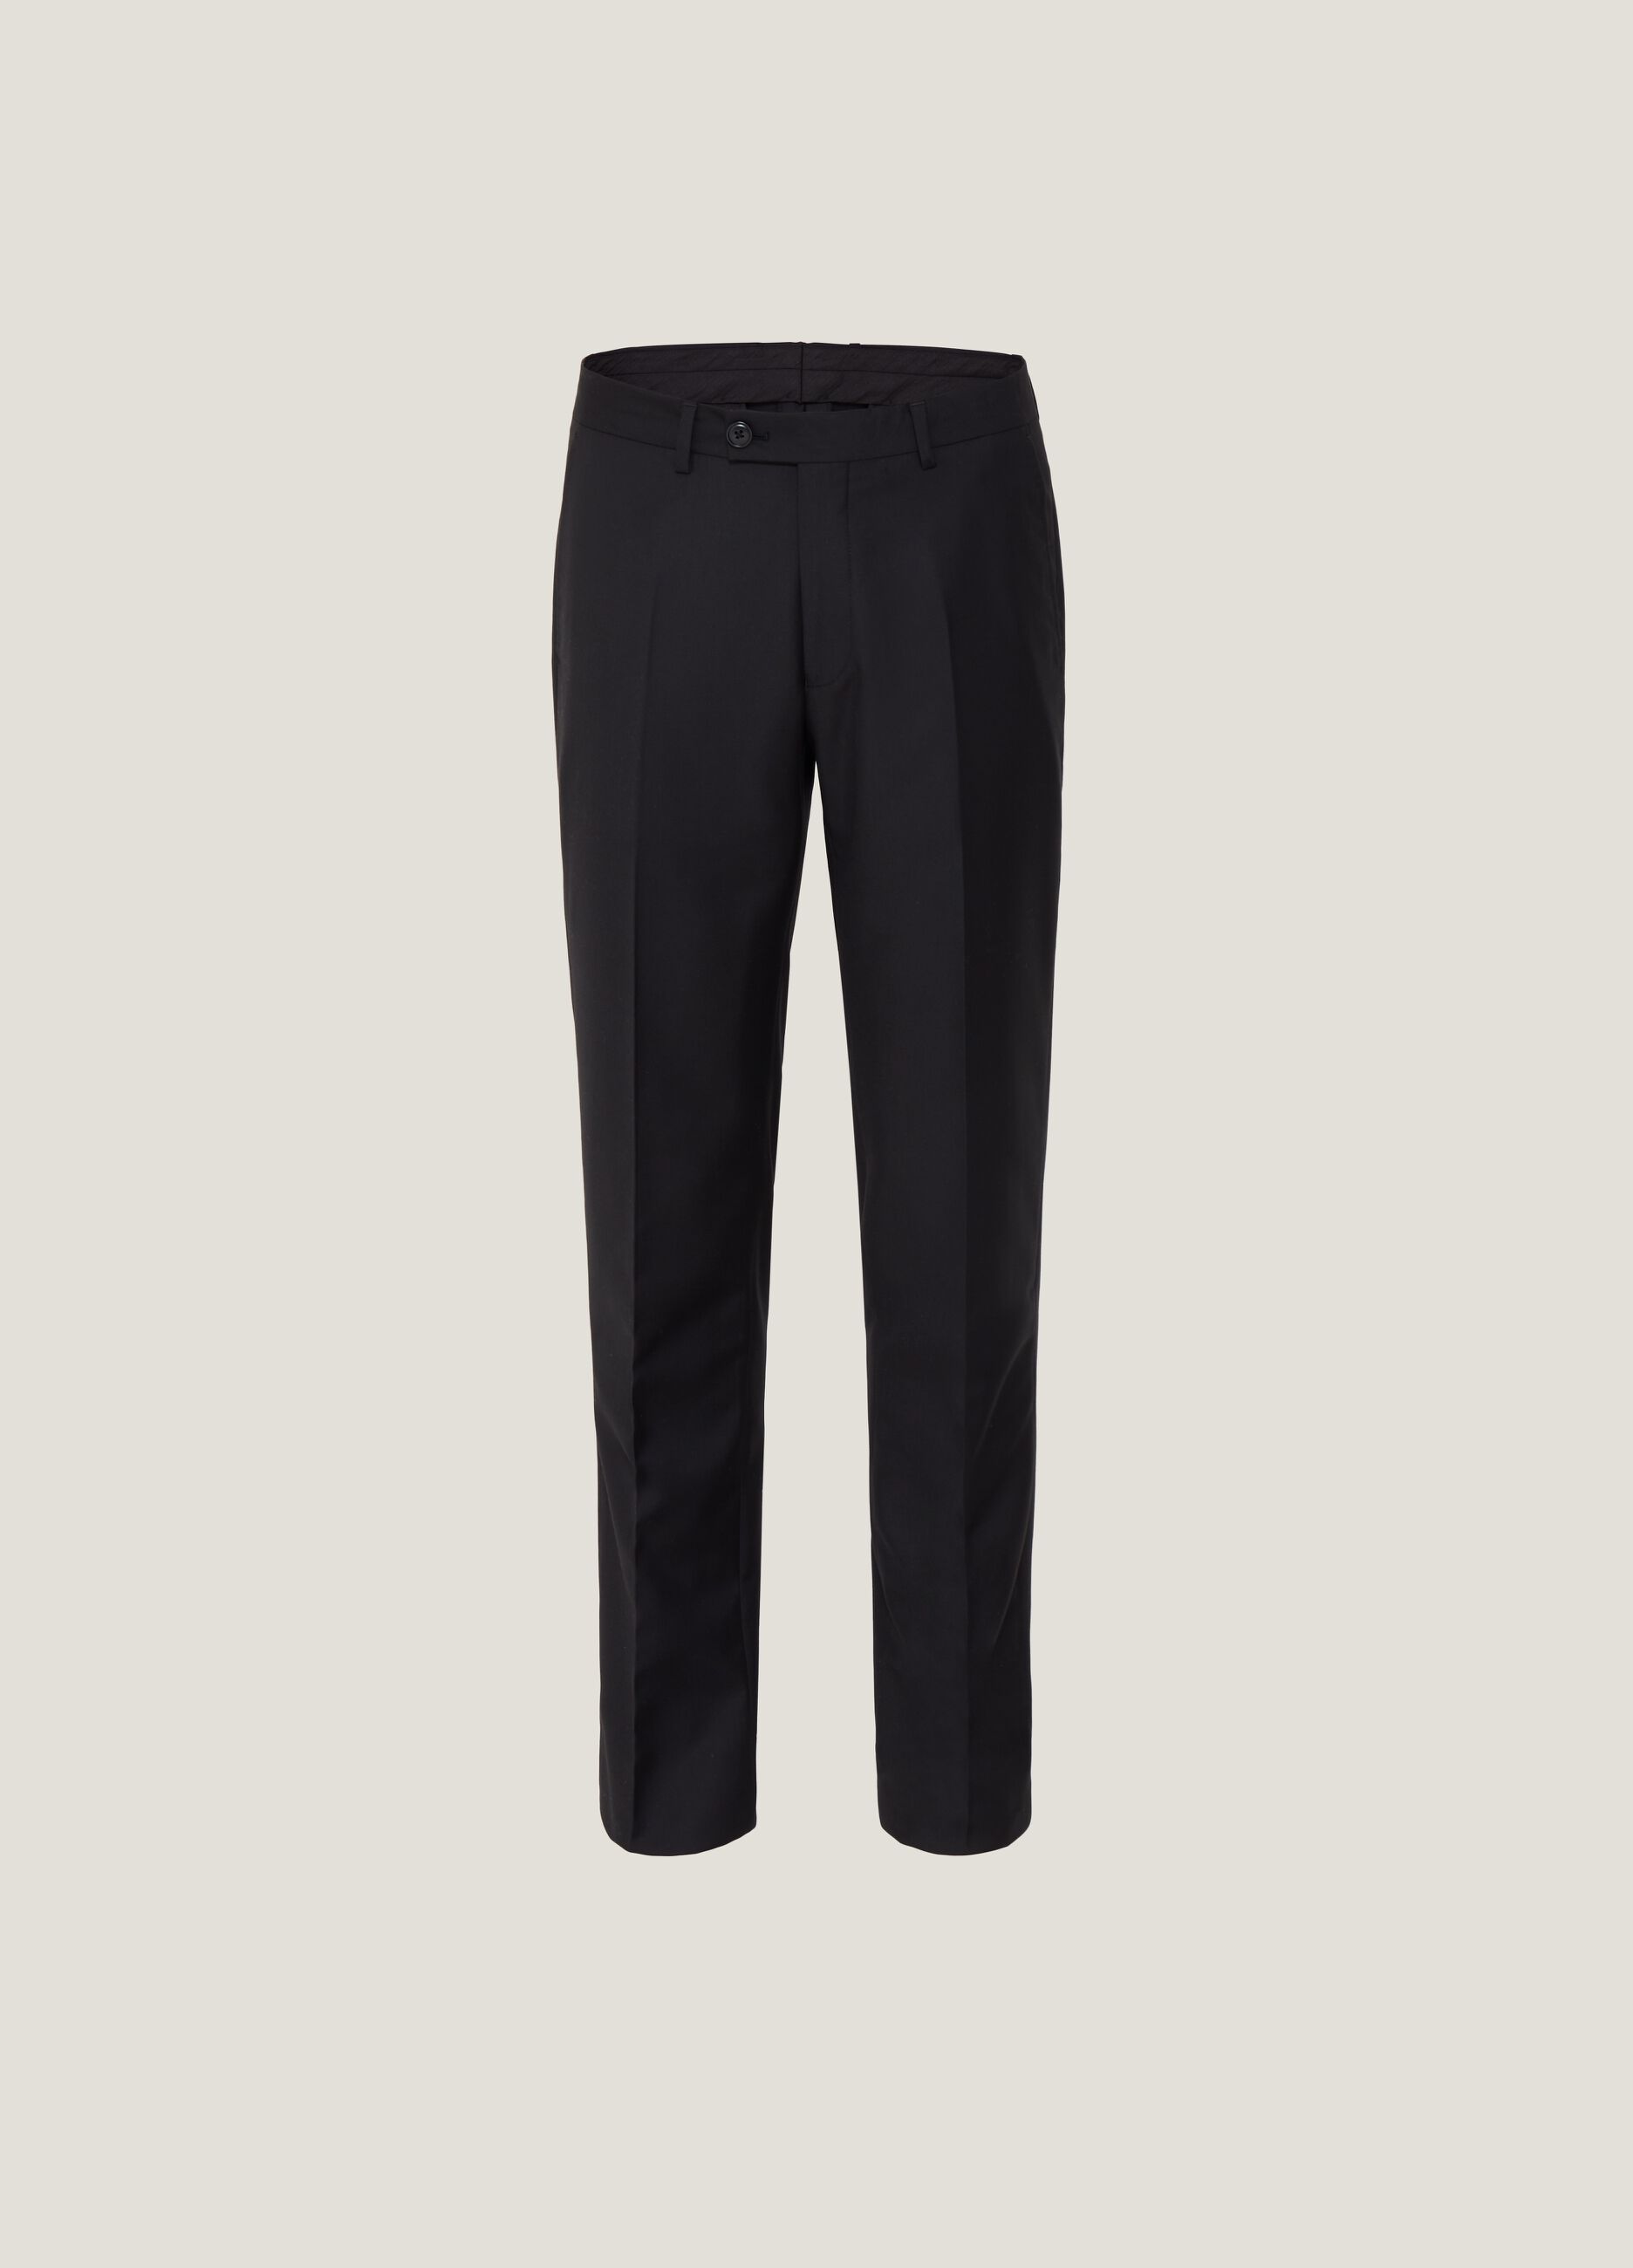 Buy RUACE Elegant Collection Men's Smart Slim Fit Regal Blue Formal Trouser  at Amazon.in